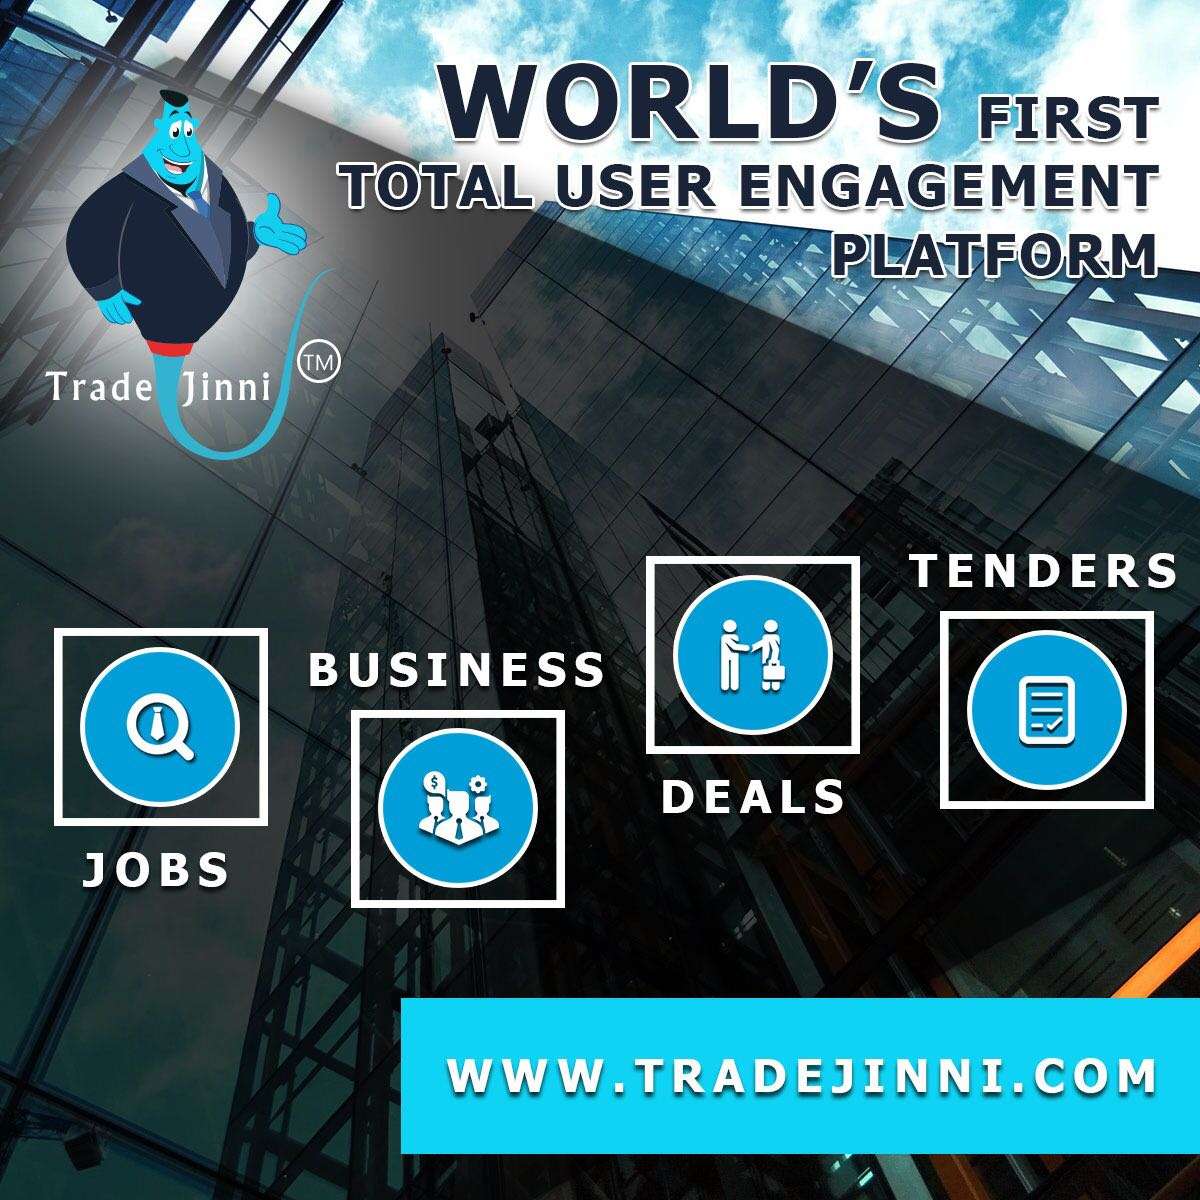 Tradejinni - Best Business Listing Services